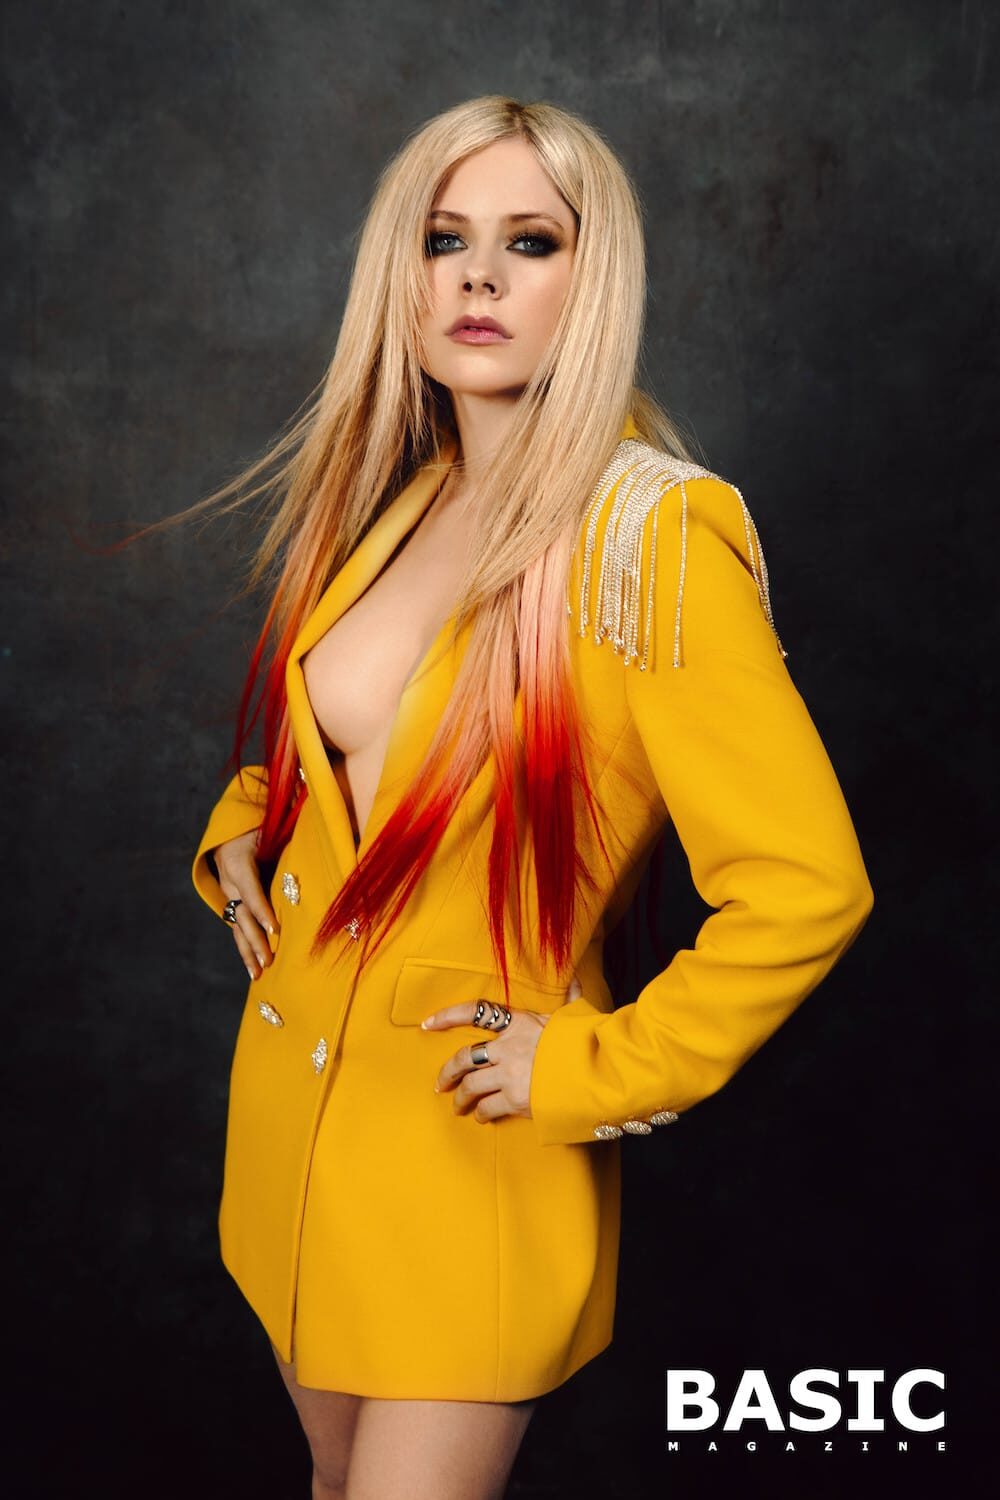 Avril Lavigne Looks Super Hot in Basic Magazine Issue 19 2022